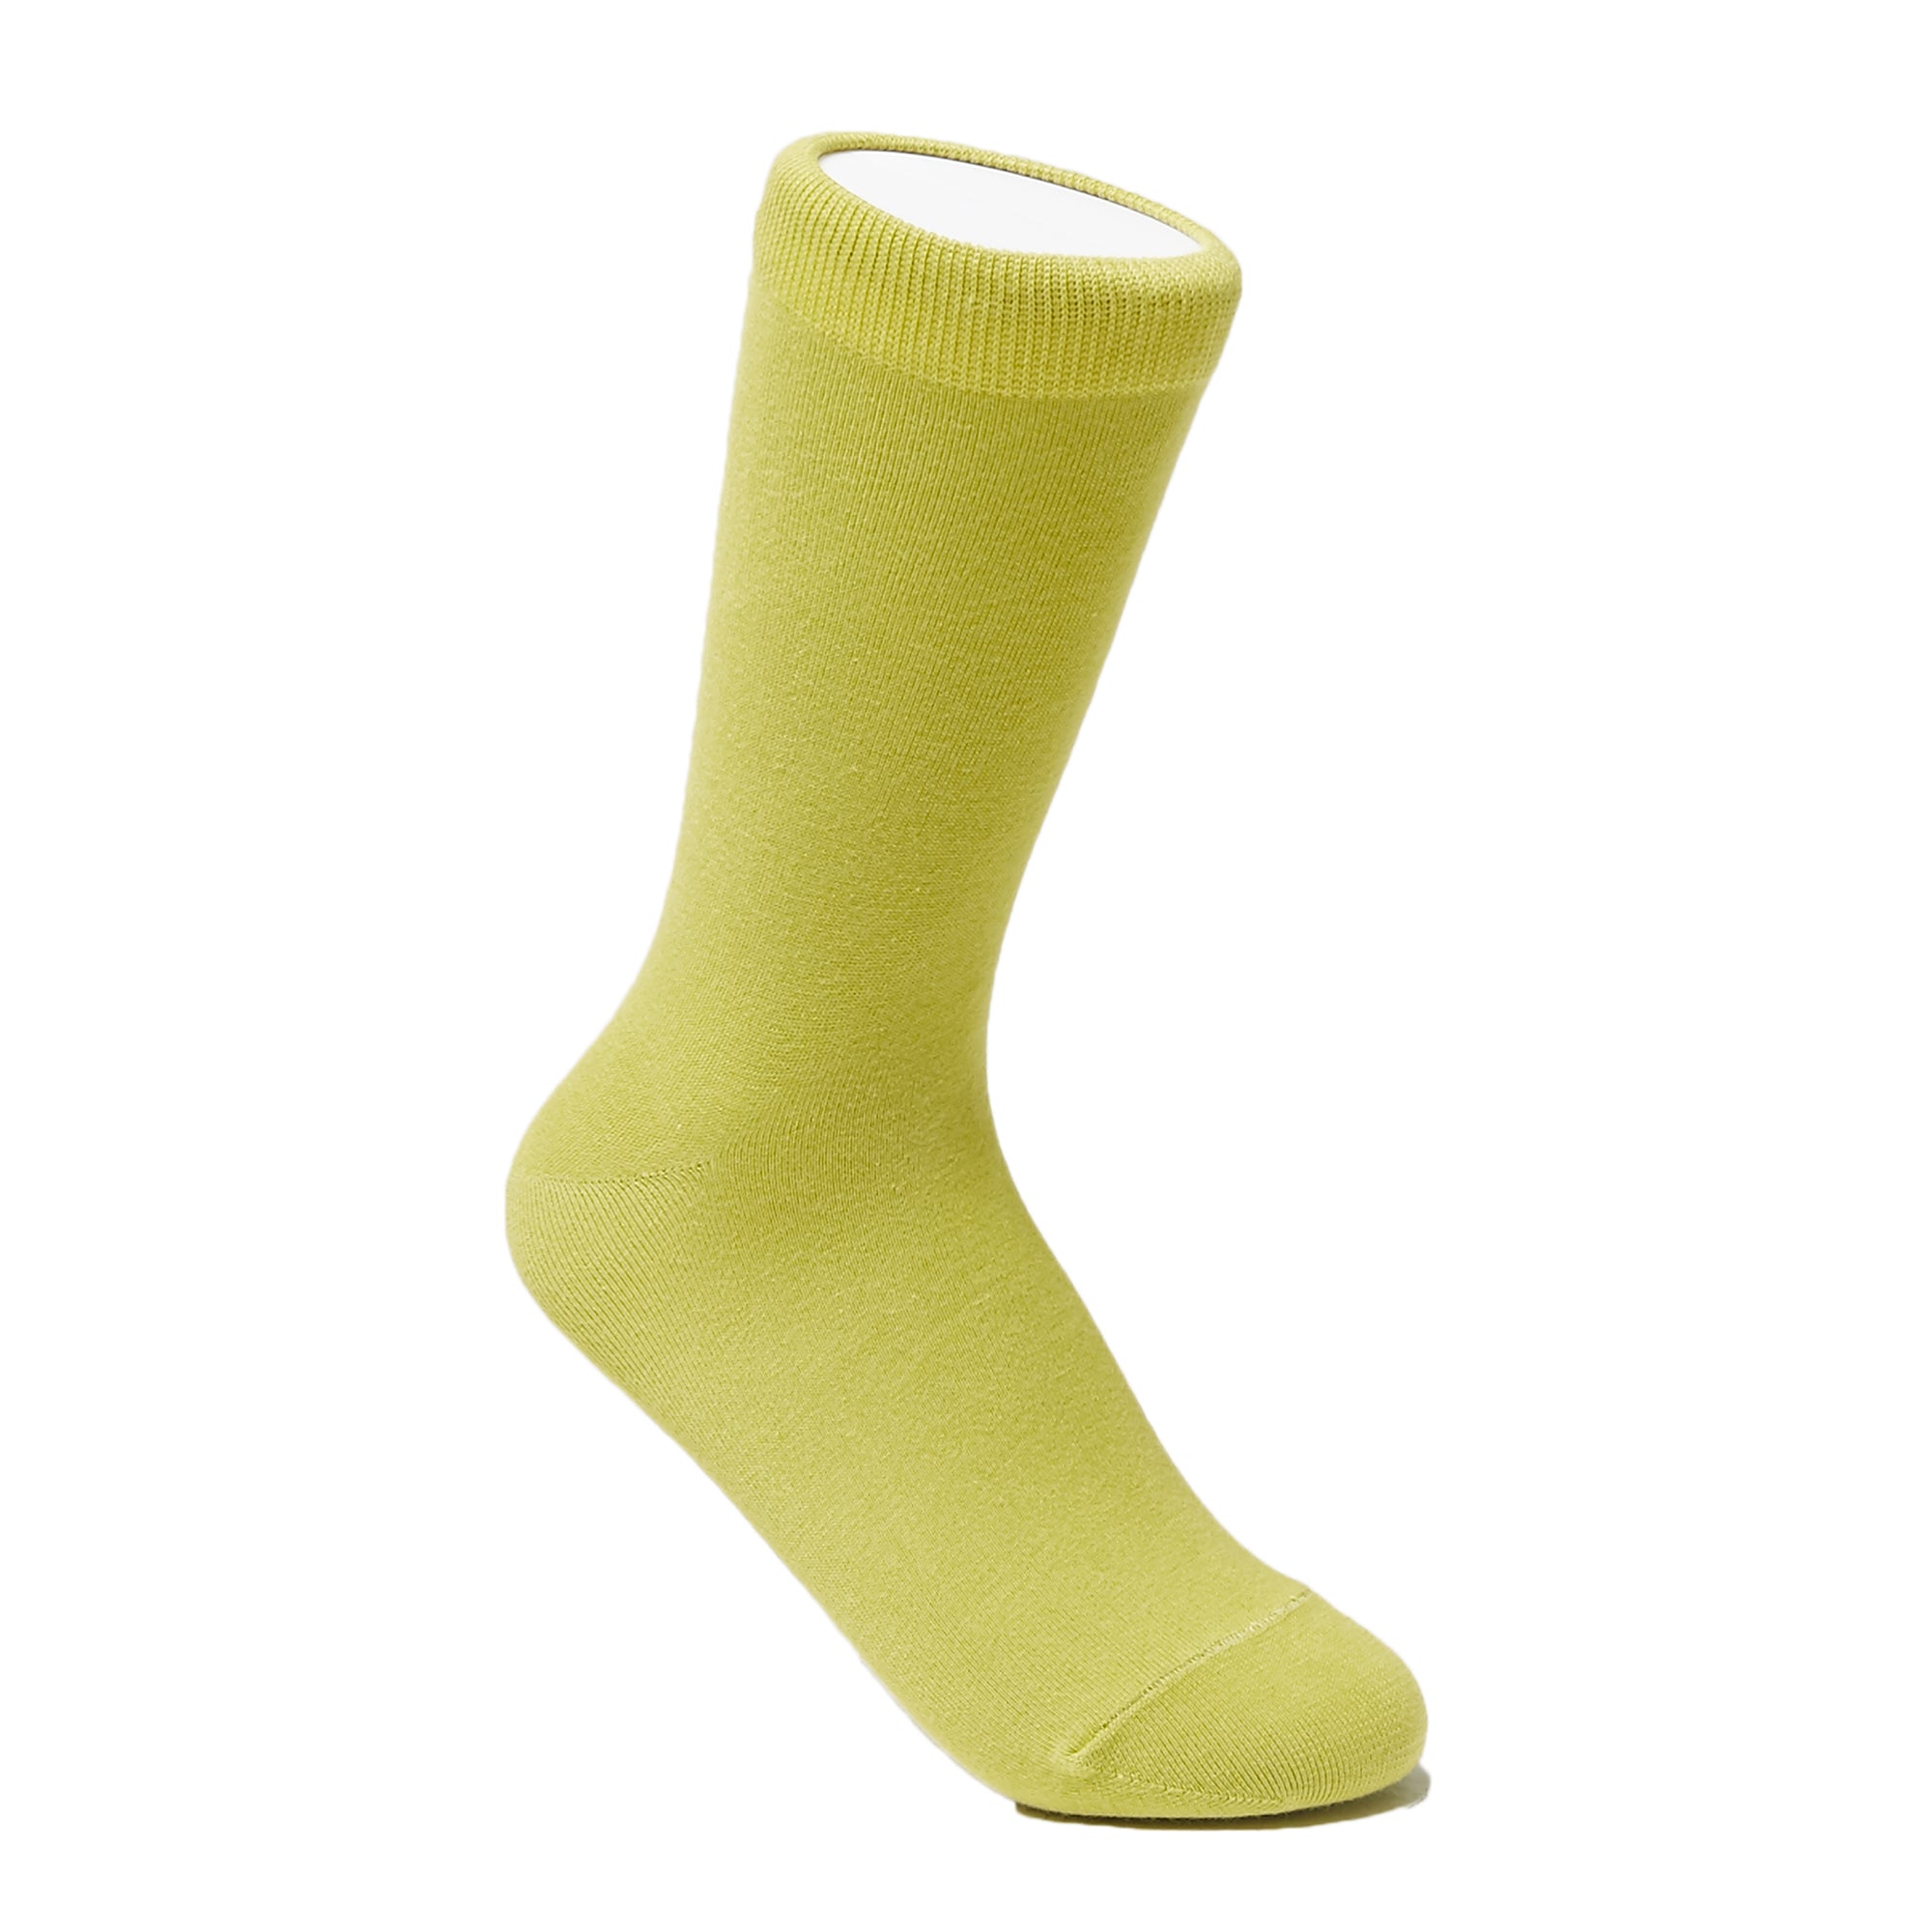 Warm Olive - Votta Socks